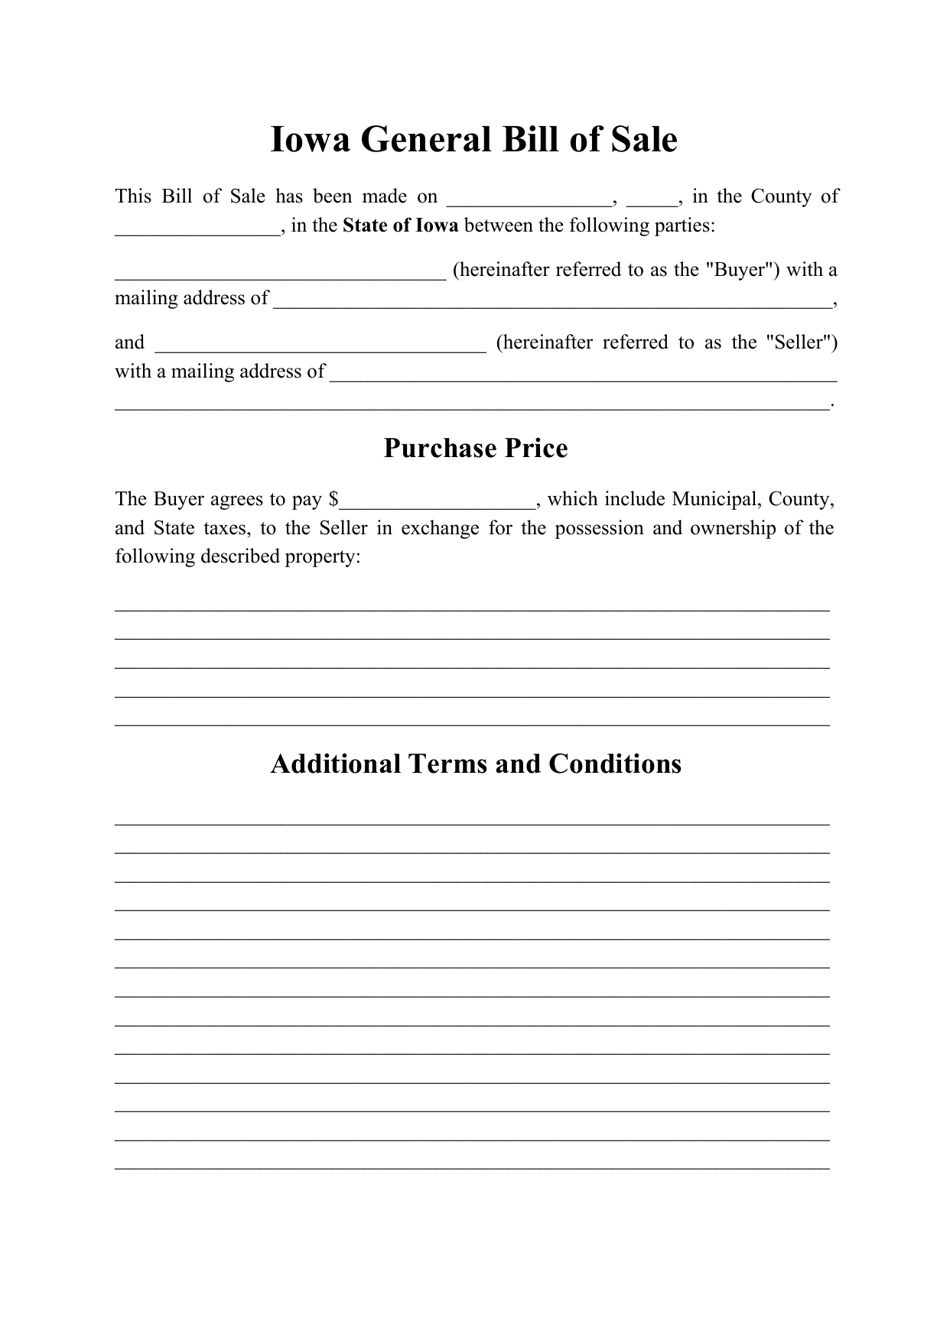 Generic Bill of Sale Form - Iowa, Page 1